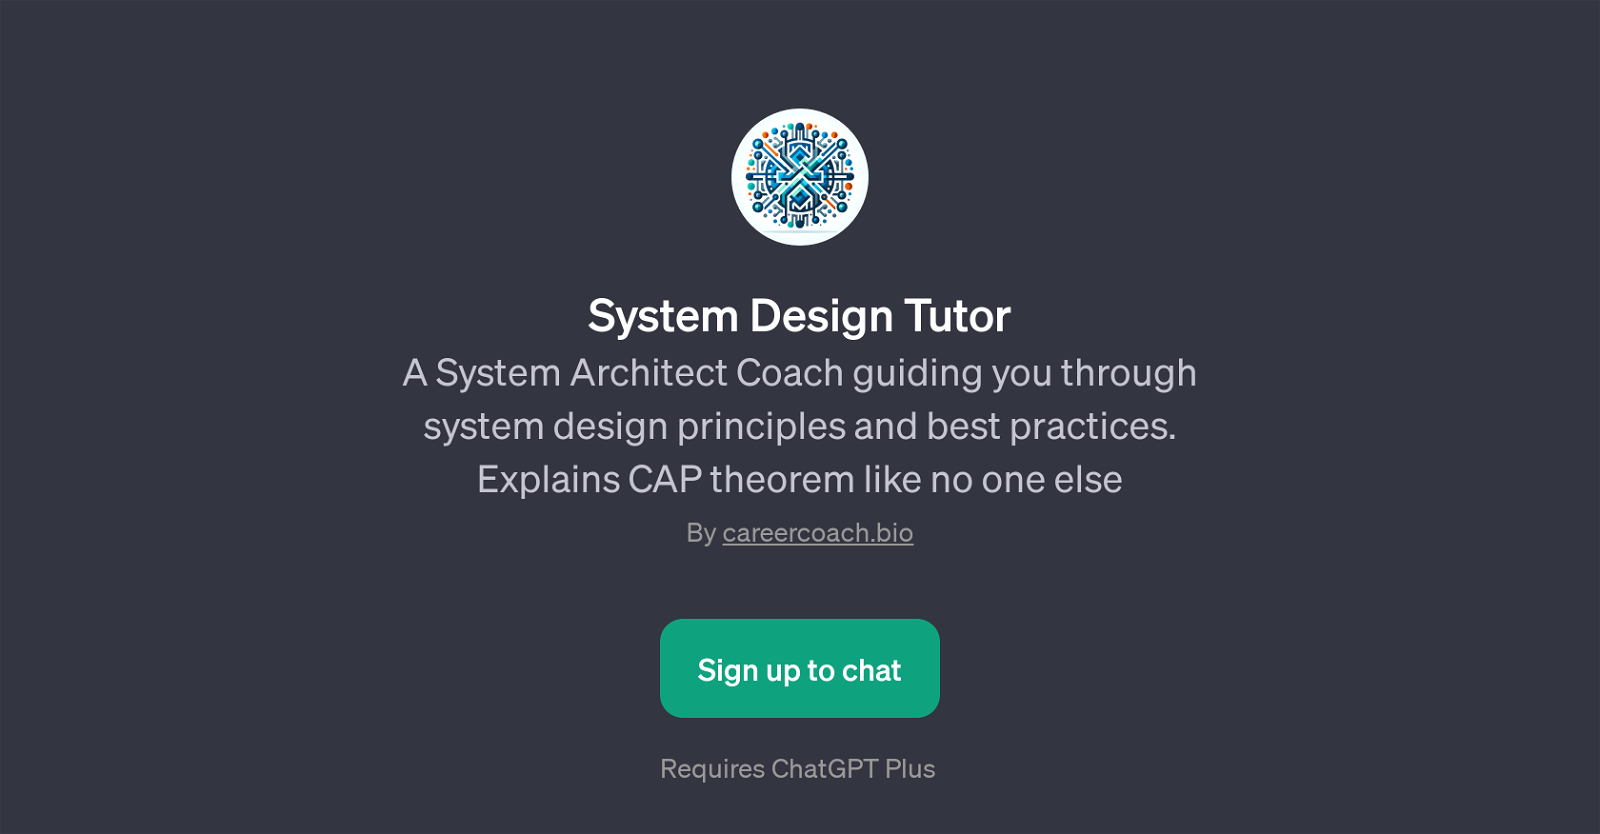 System Design Tutor website